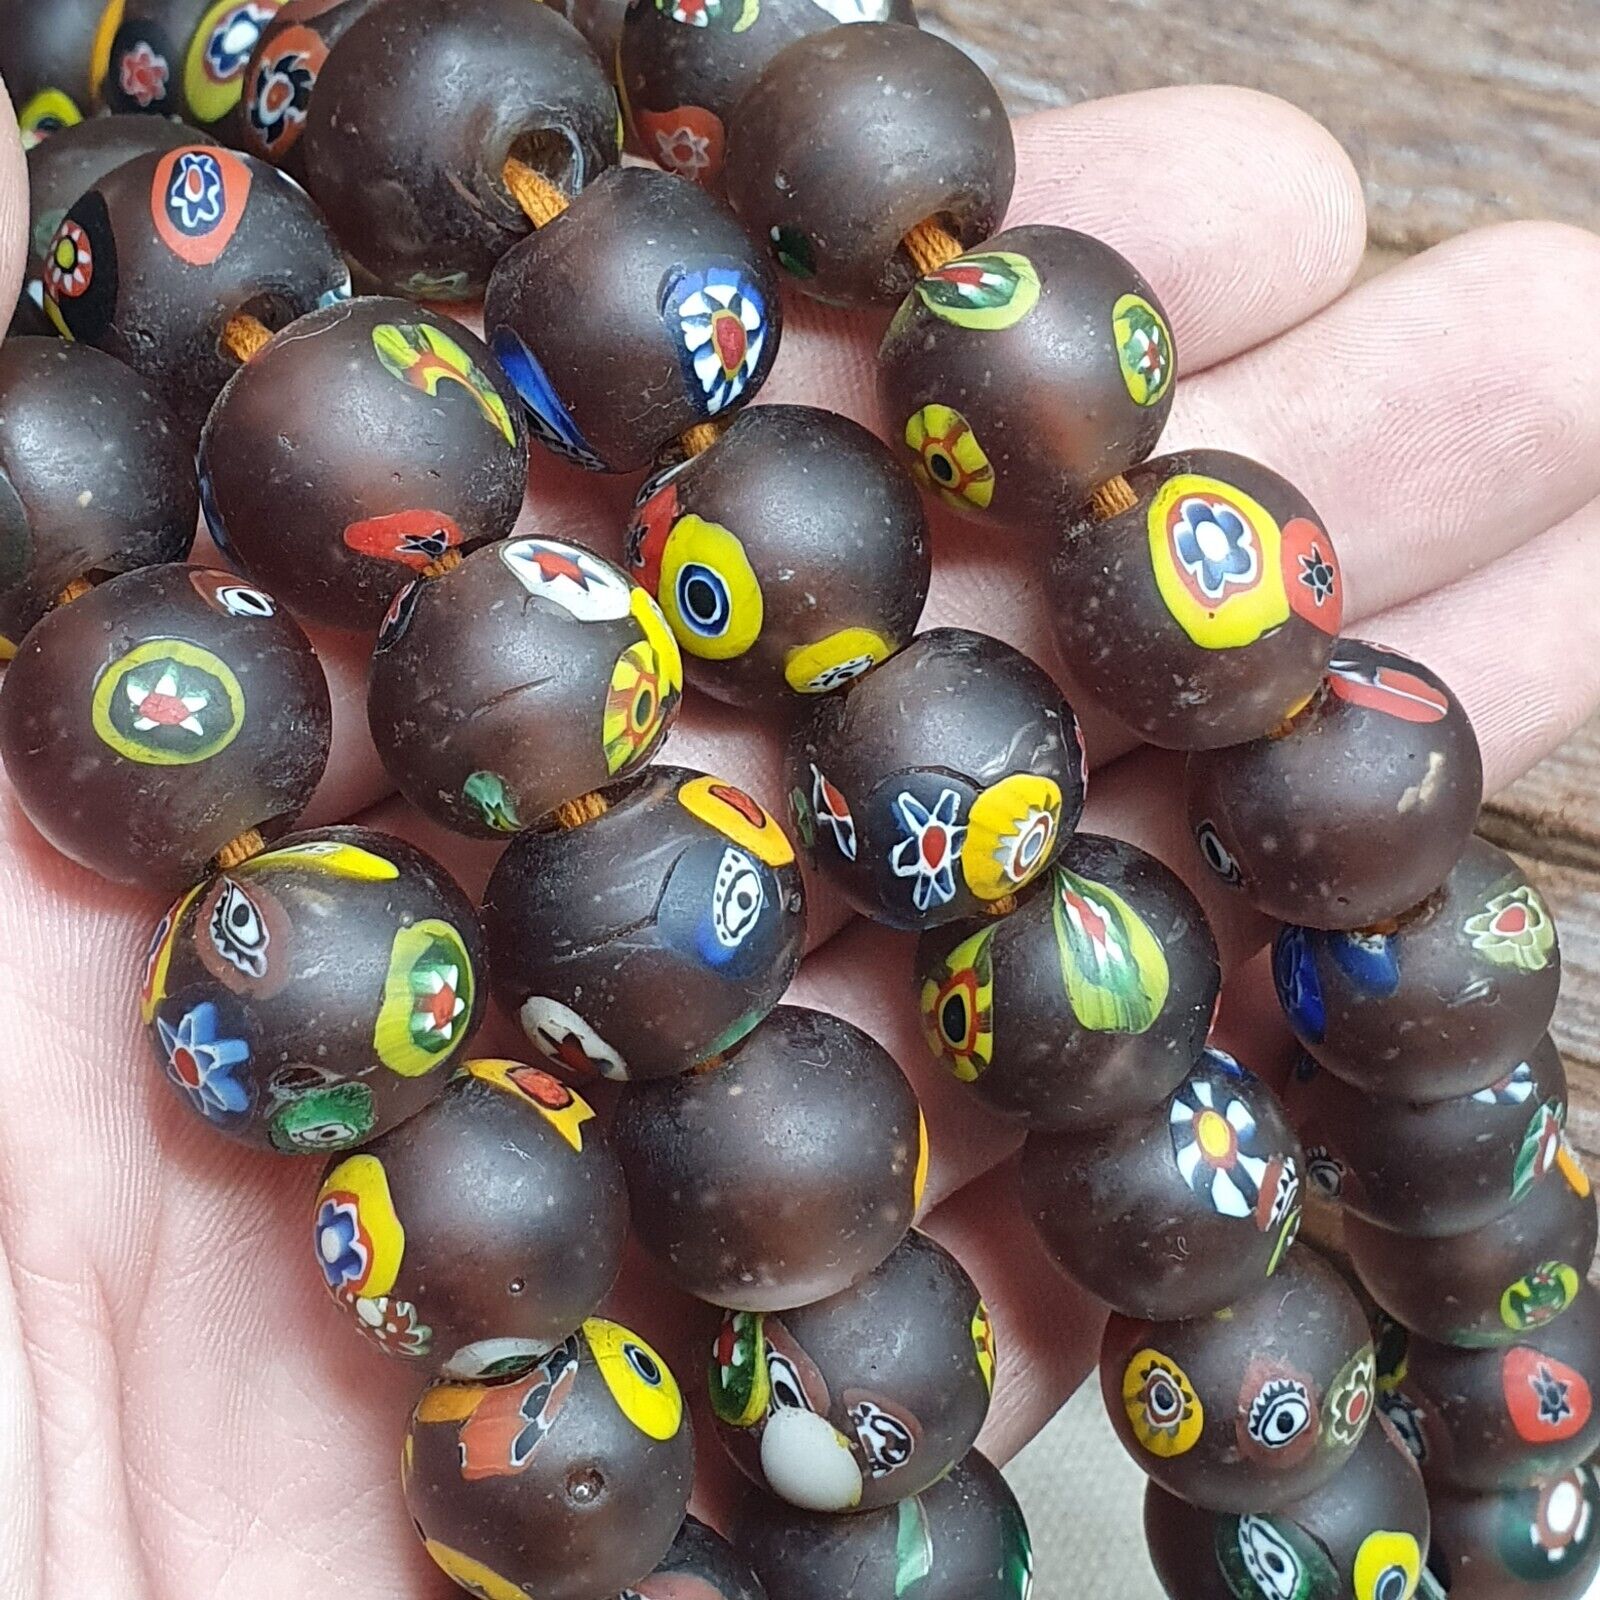 Amazing Vintage venetian-African Murano Style Glass beads Strand 15-16mm